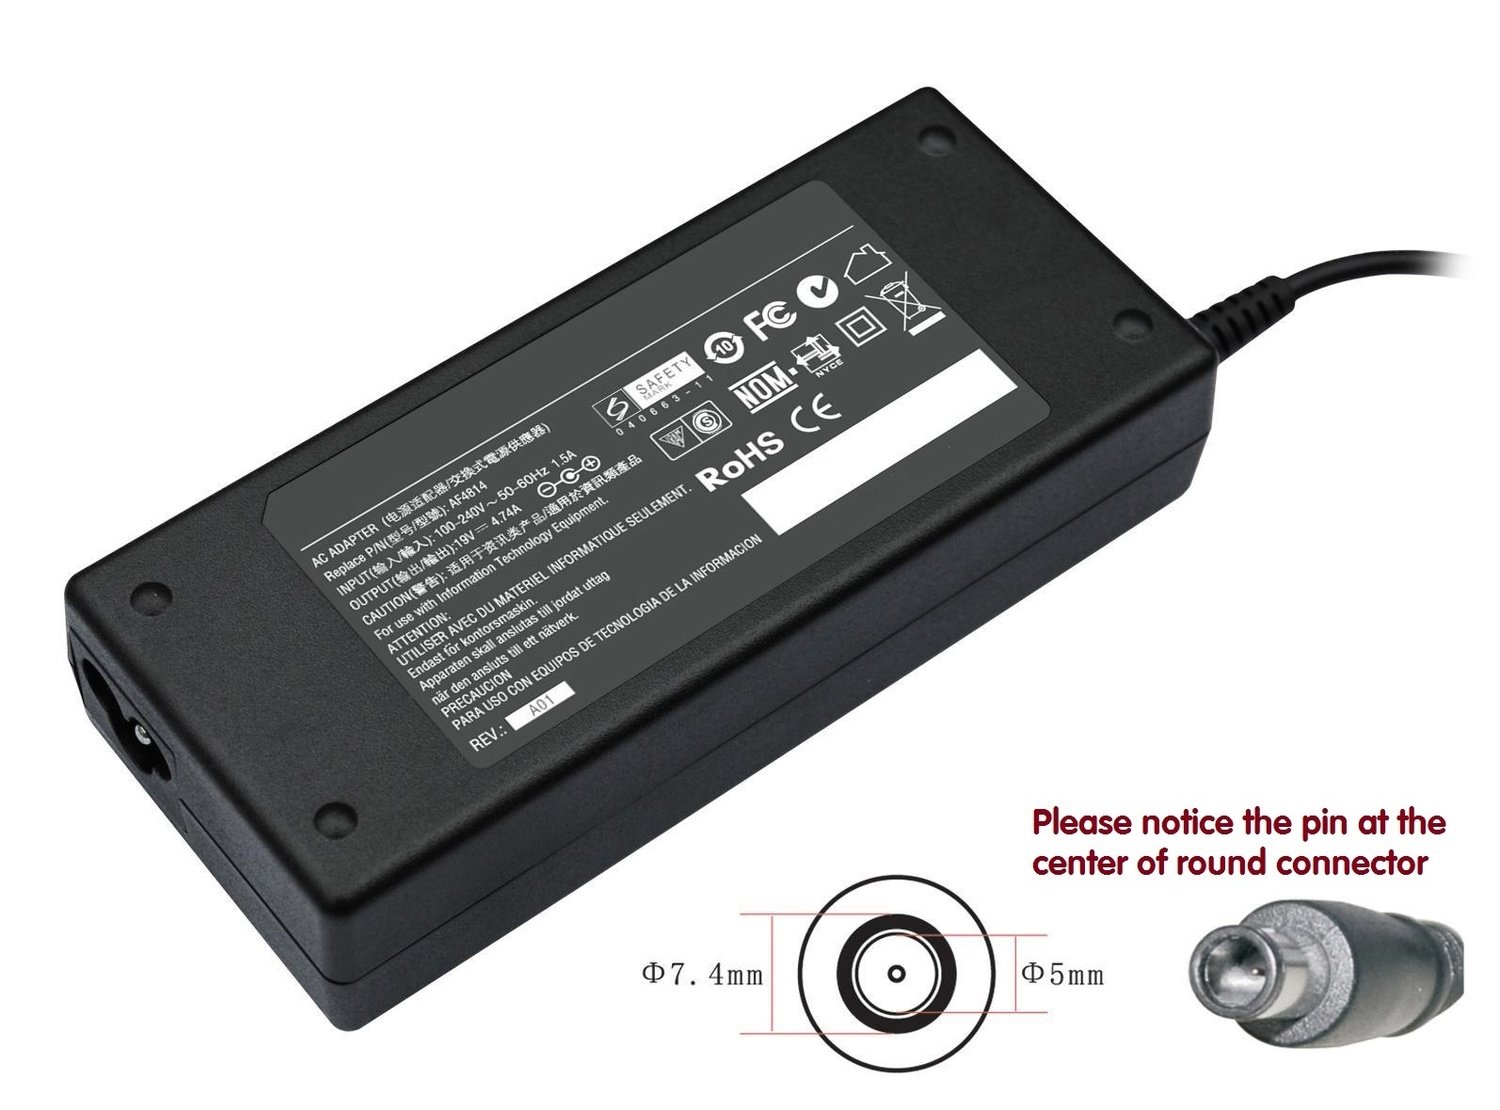 Dell Inspiron 1720 6400 E1505 640M E1405 9400 E1705 Compatible laptop charger / ac power adaptor